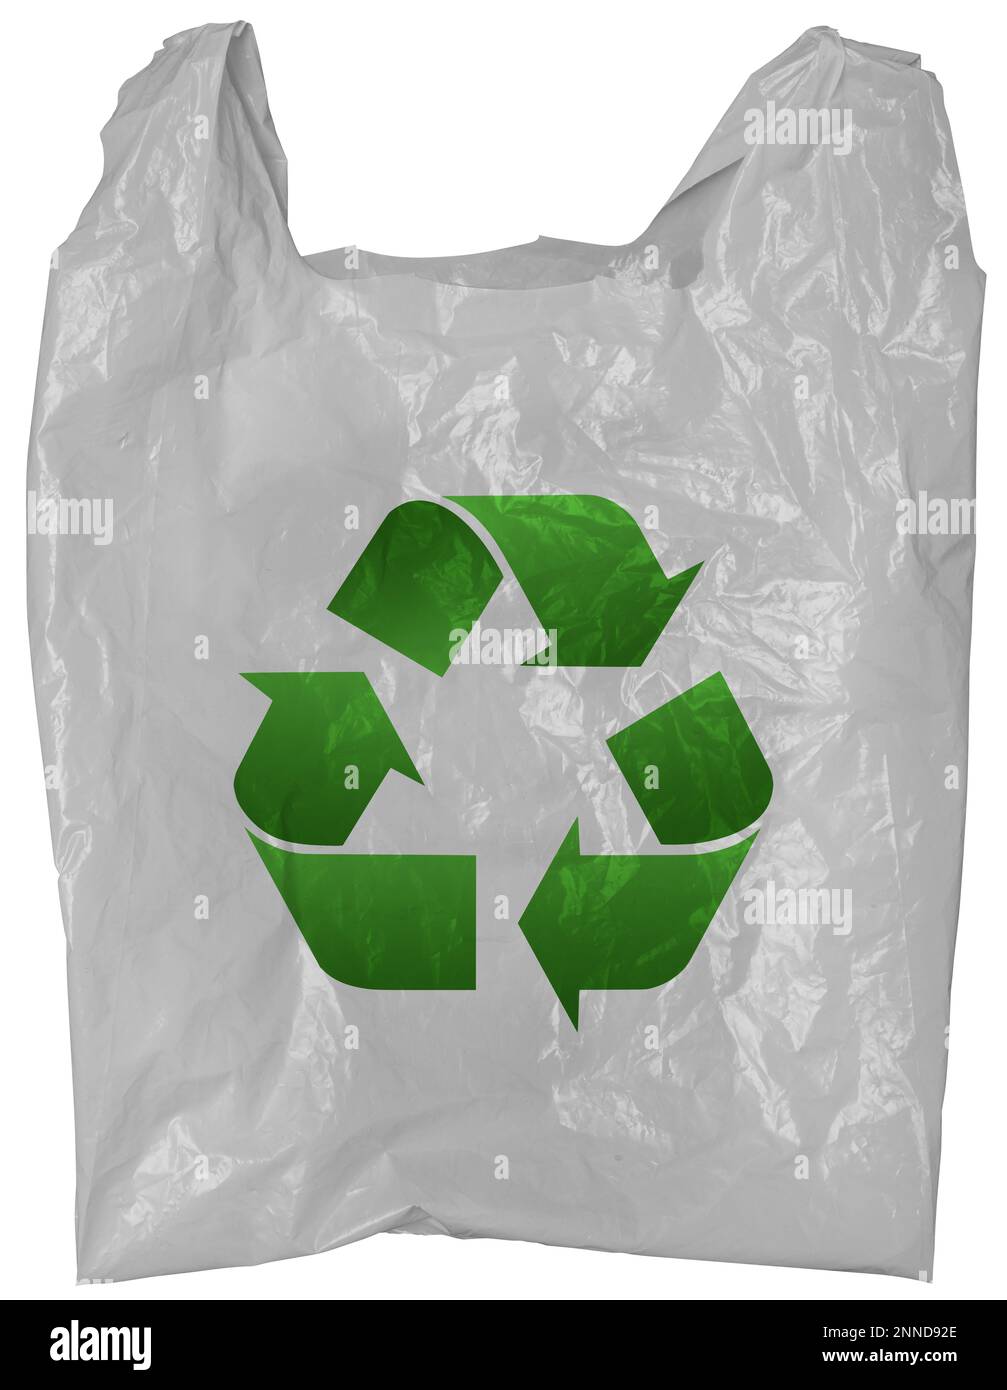 20 Creative Ways to Reuse Plastic Bags